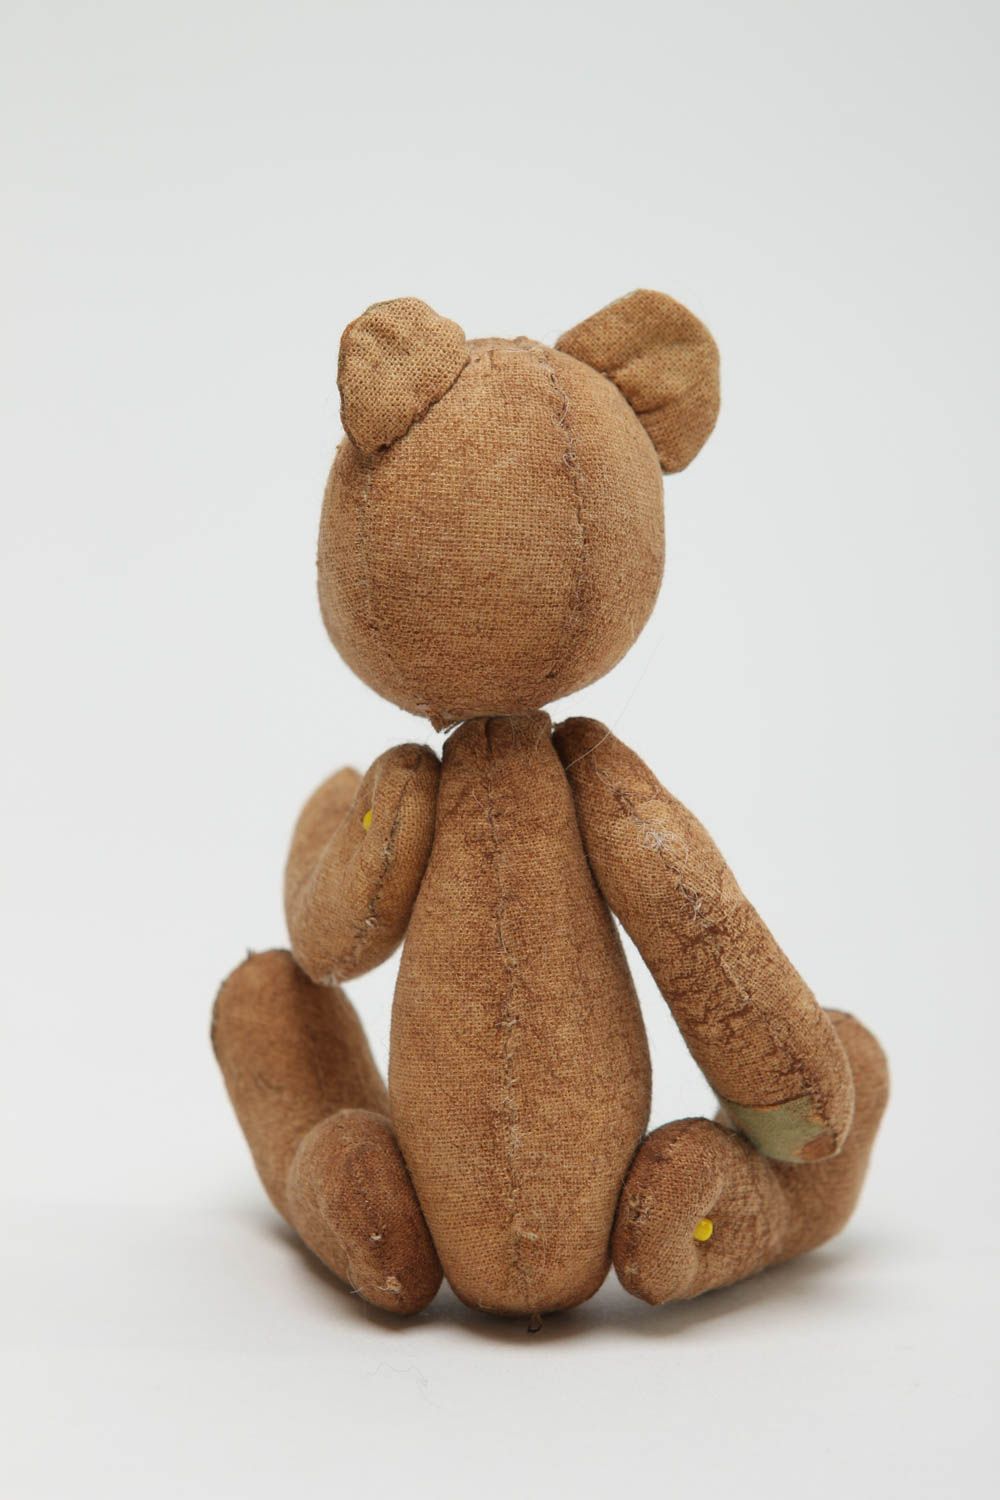 Handmade bear toy vintage toy nursery decor ideas present for children photo 3